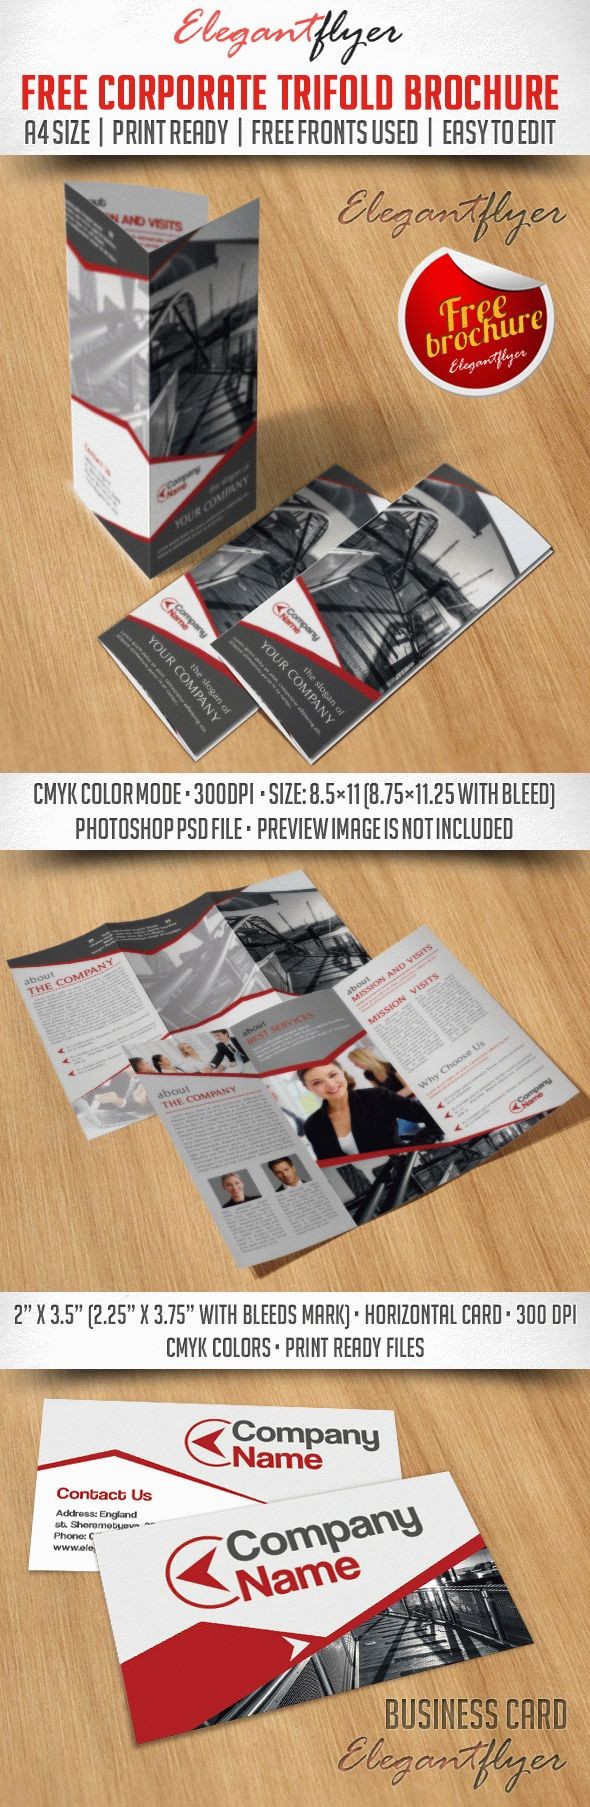 Business Corporate Tri-Fold Brochure by ElegantFlyer